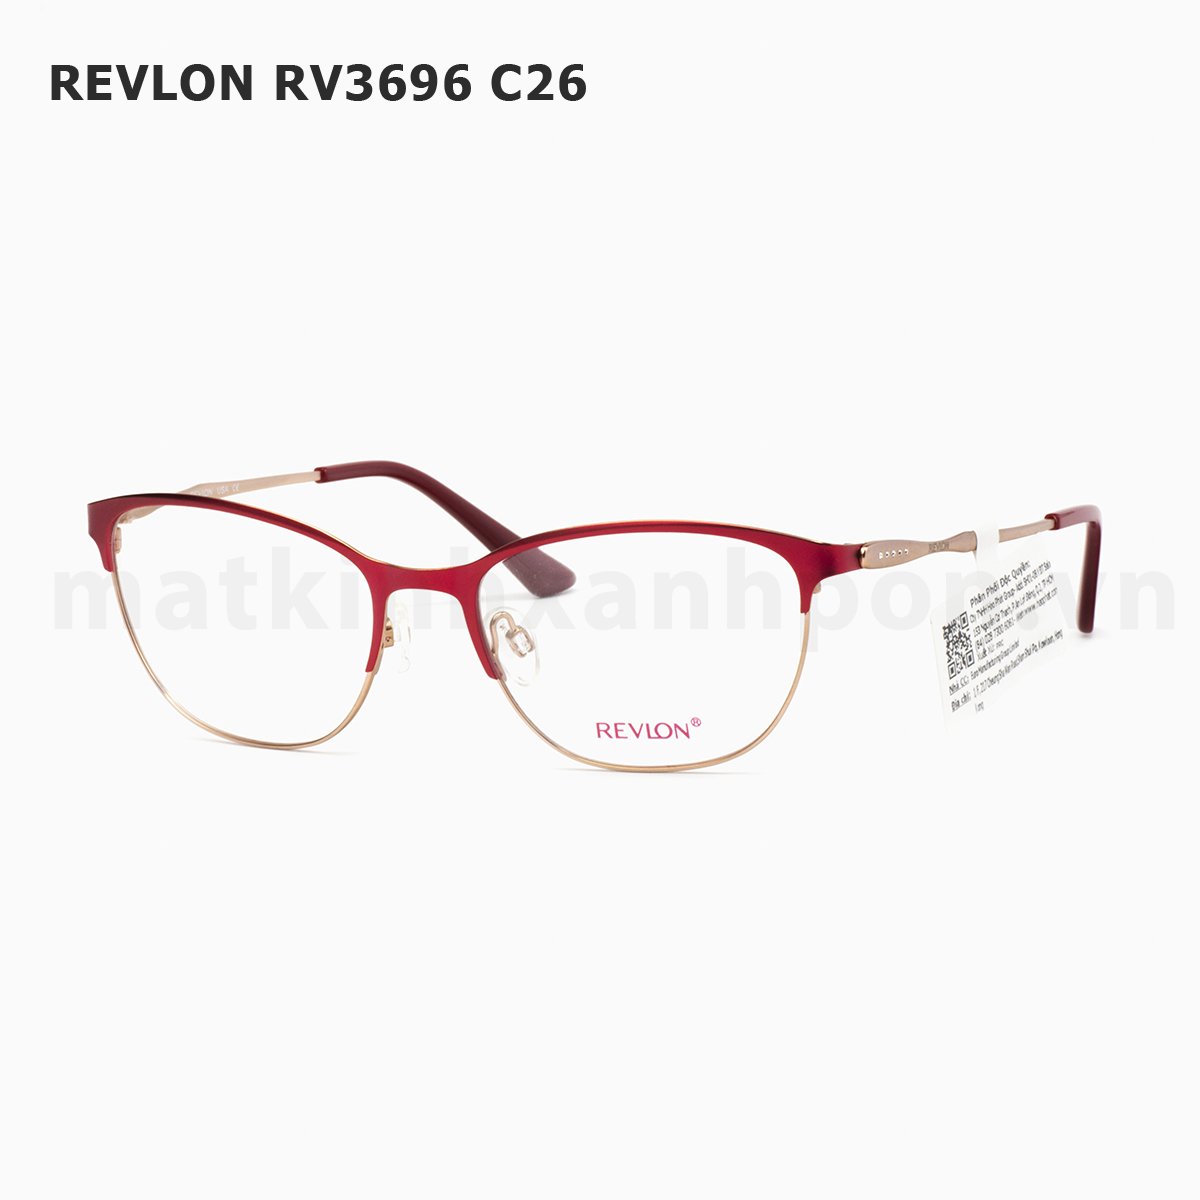 Revlon RV3696 C26